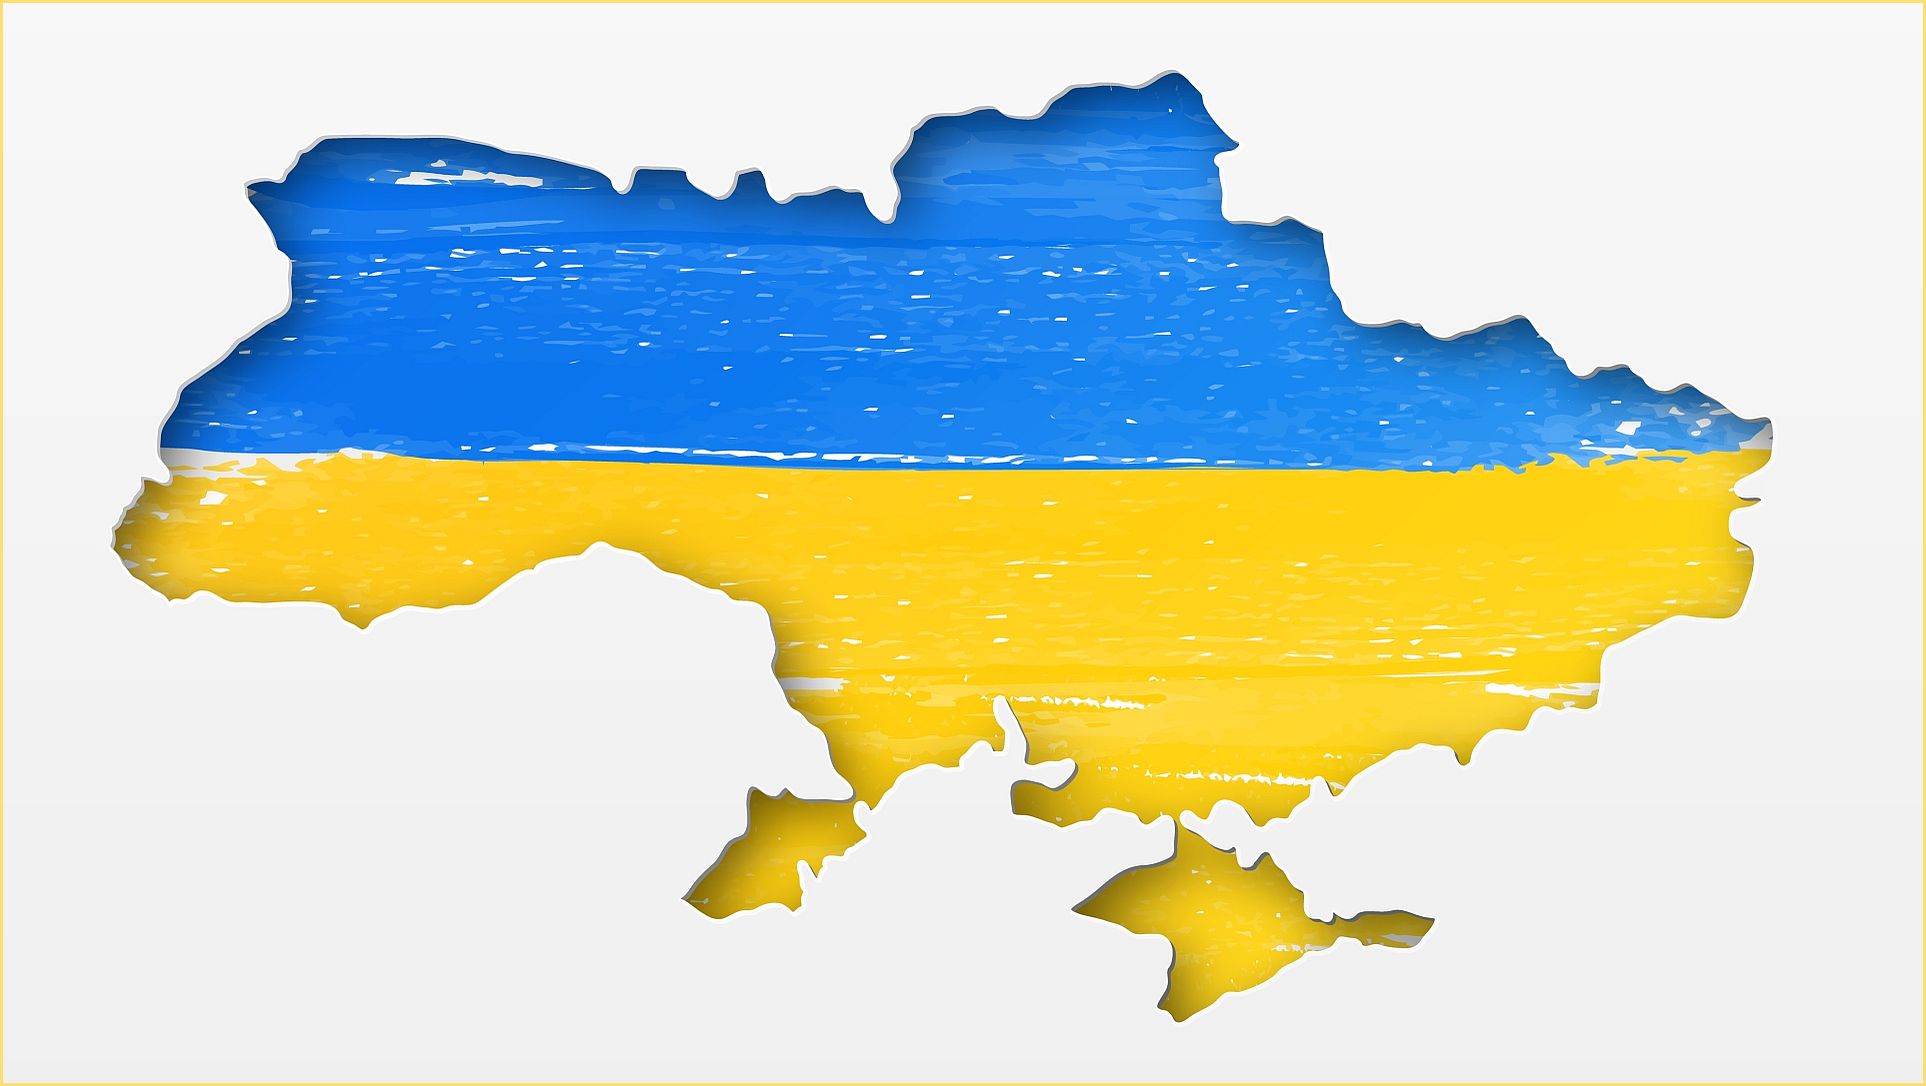 Ukraine_map_yellow_blue_263589126_HI 220318_c adobe stock lauritta